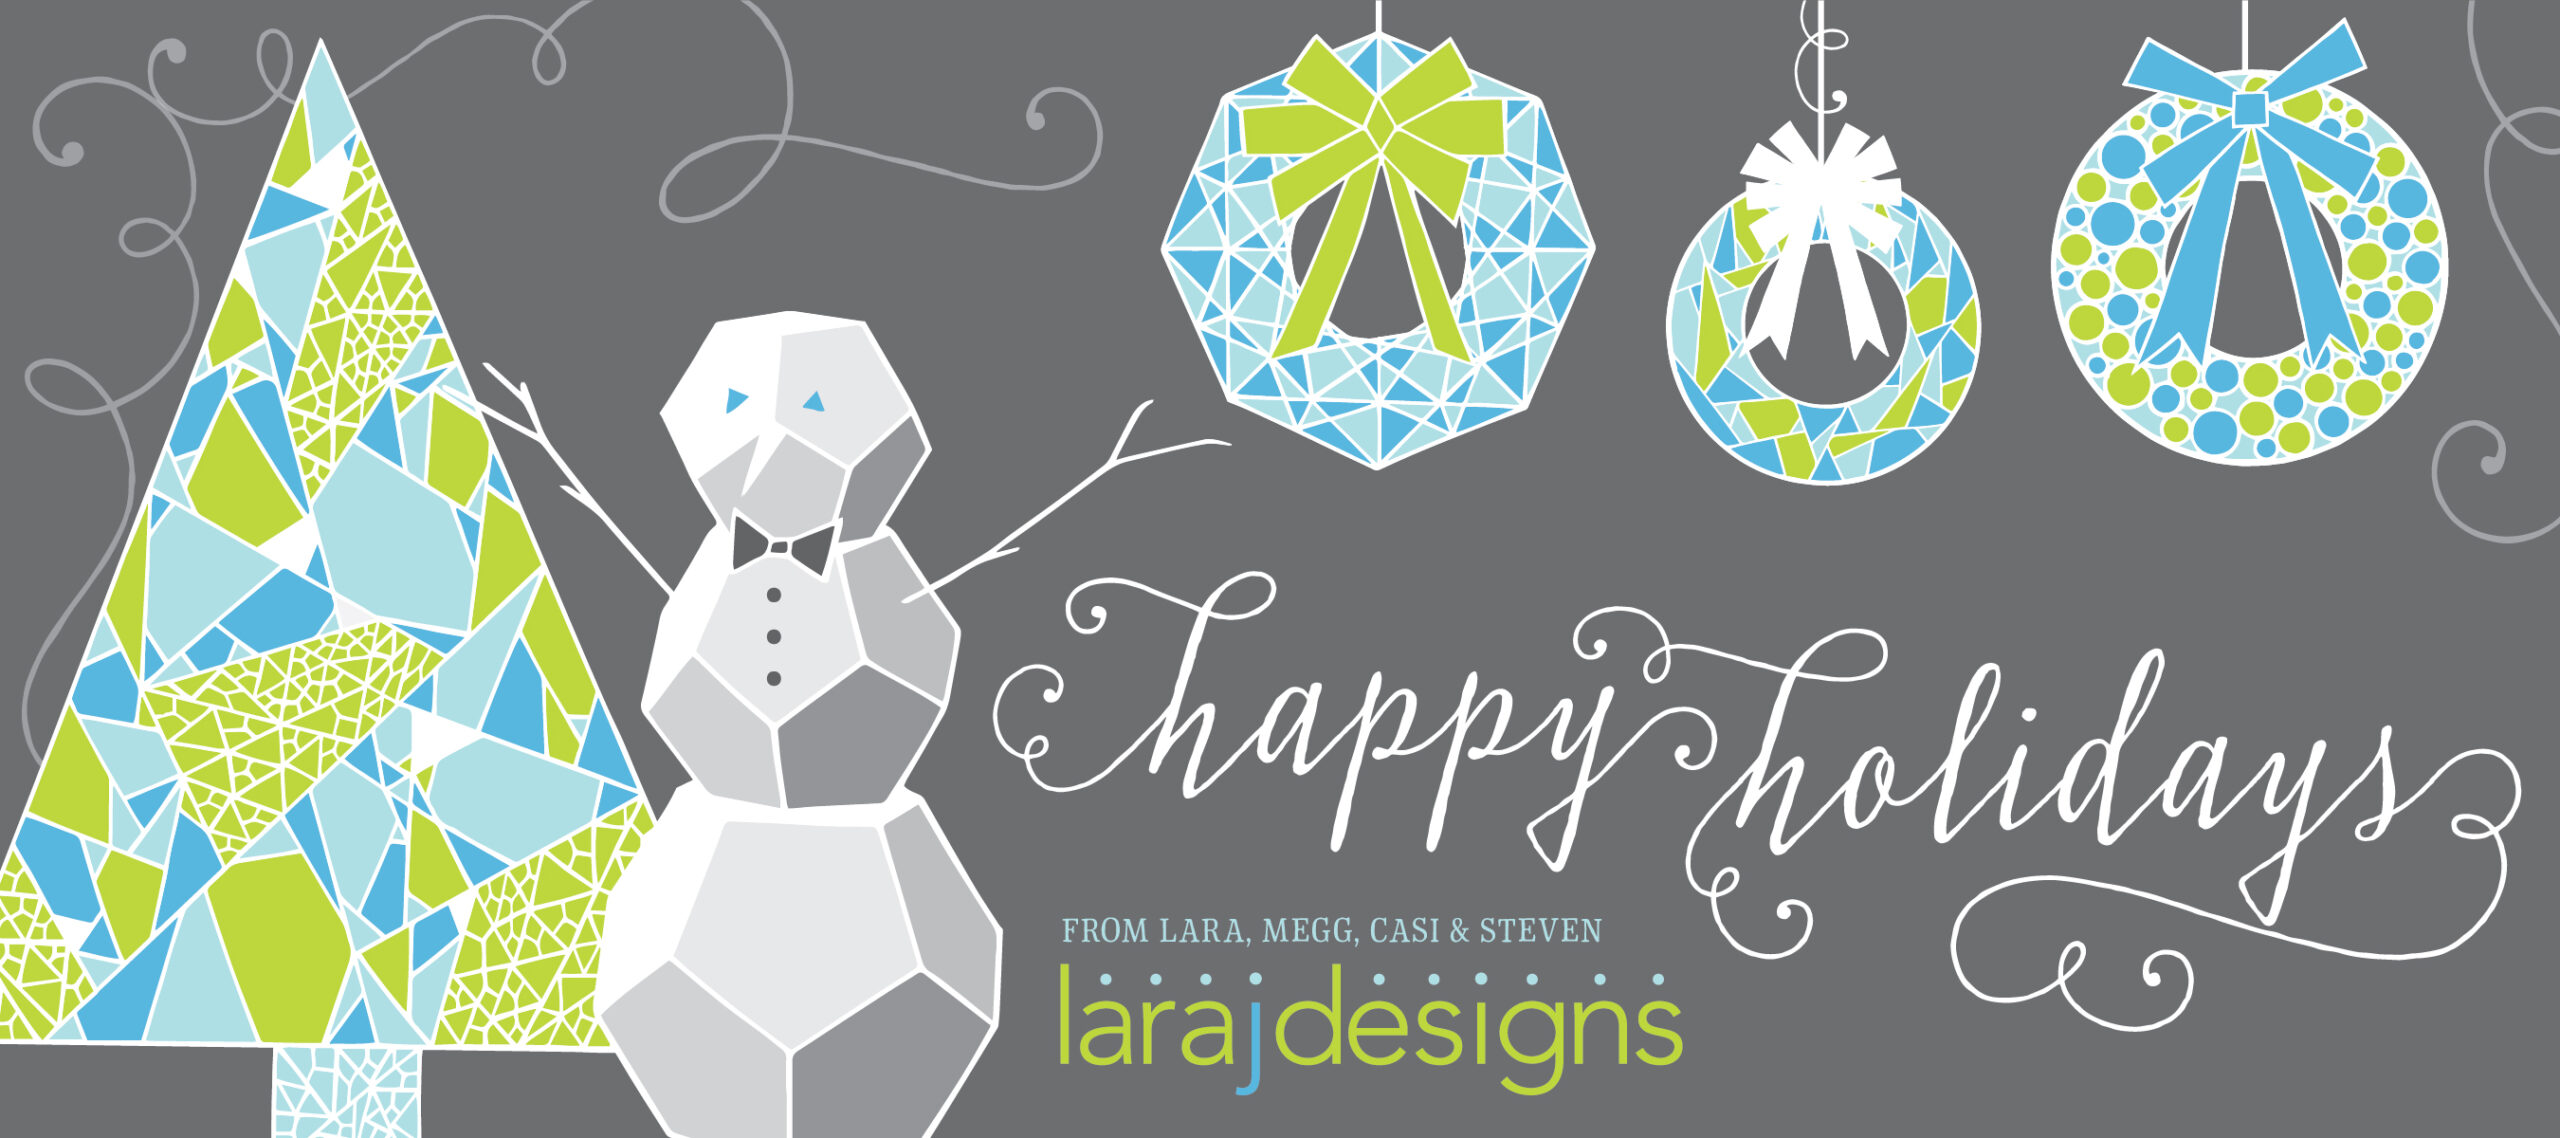 Custom Illustrations for the Lara J Designs Holiday Card